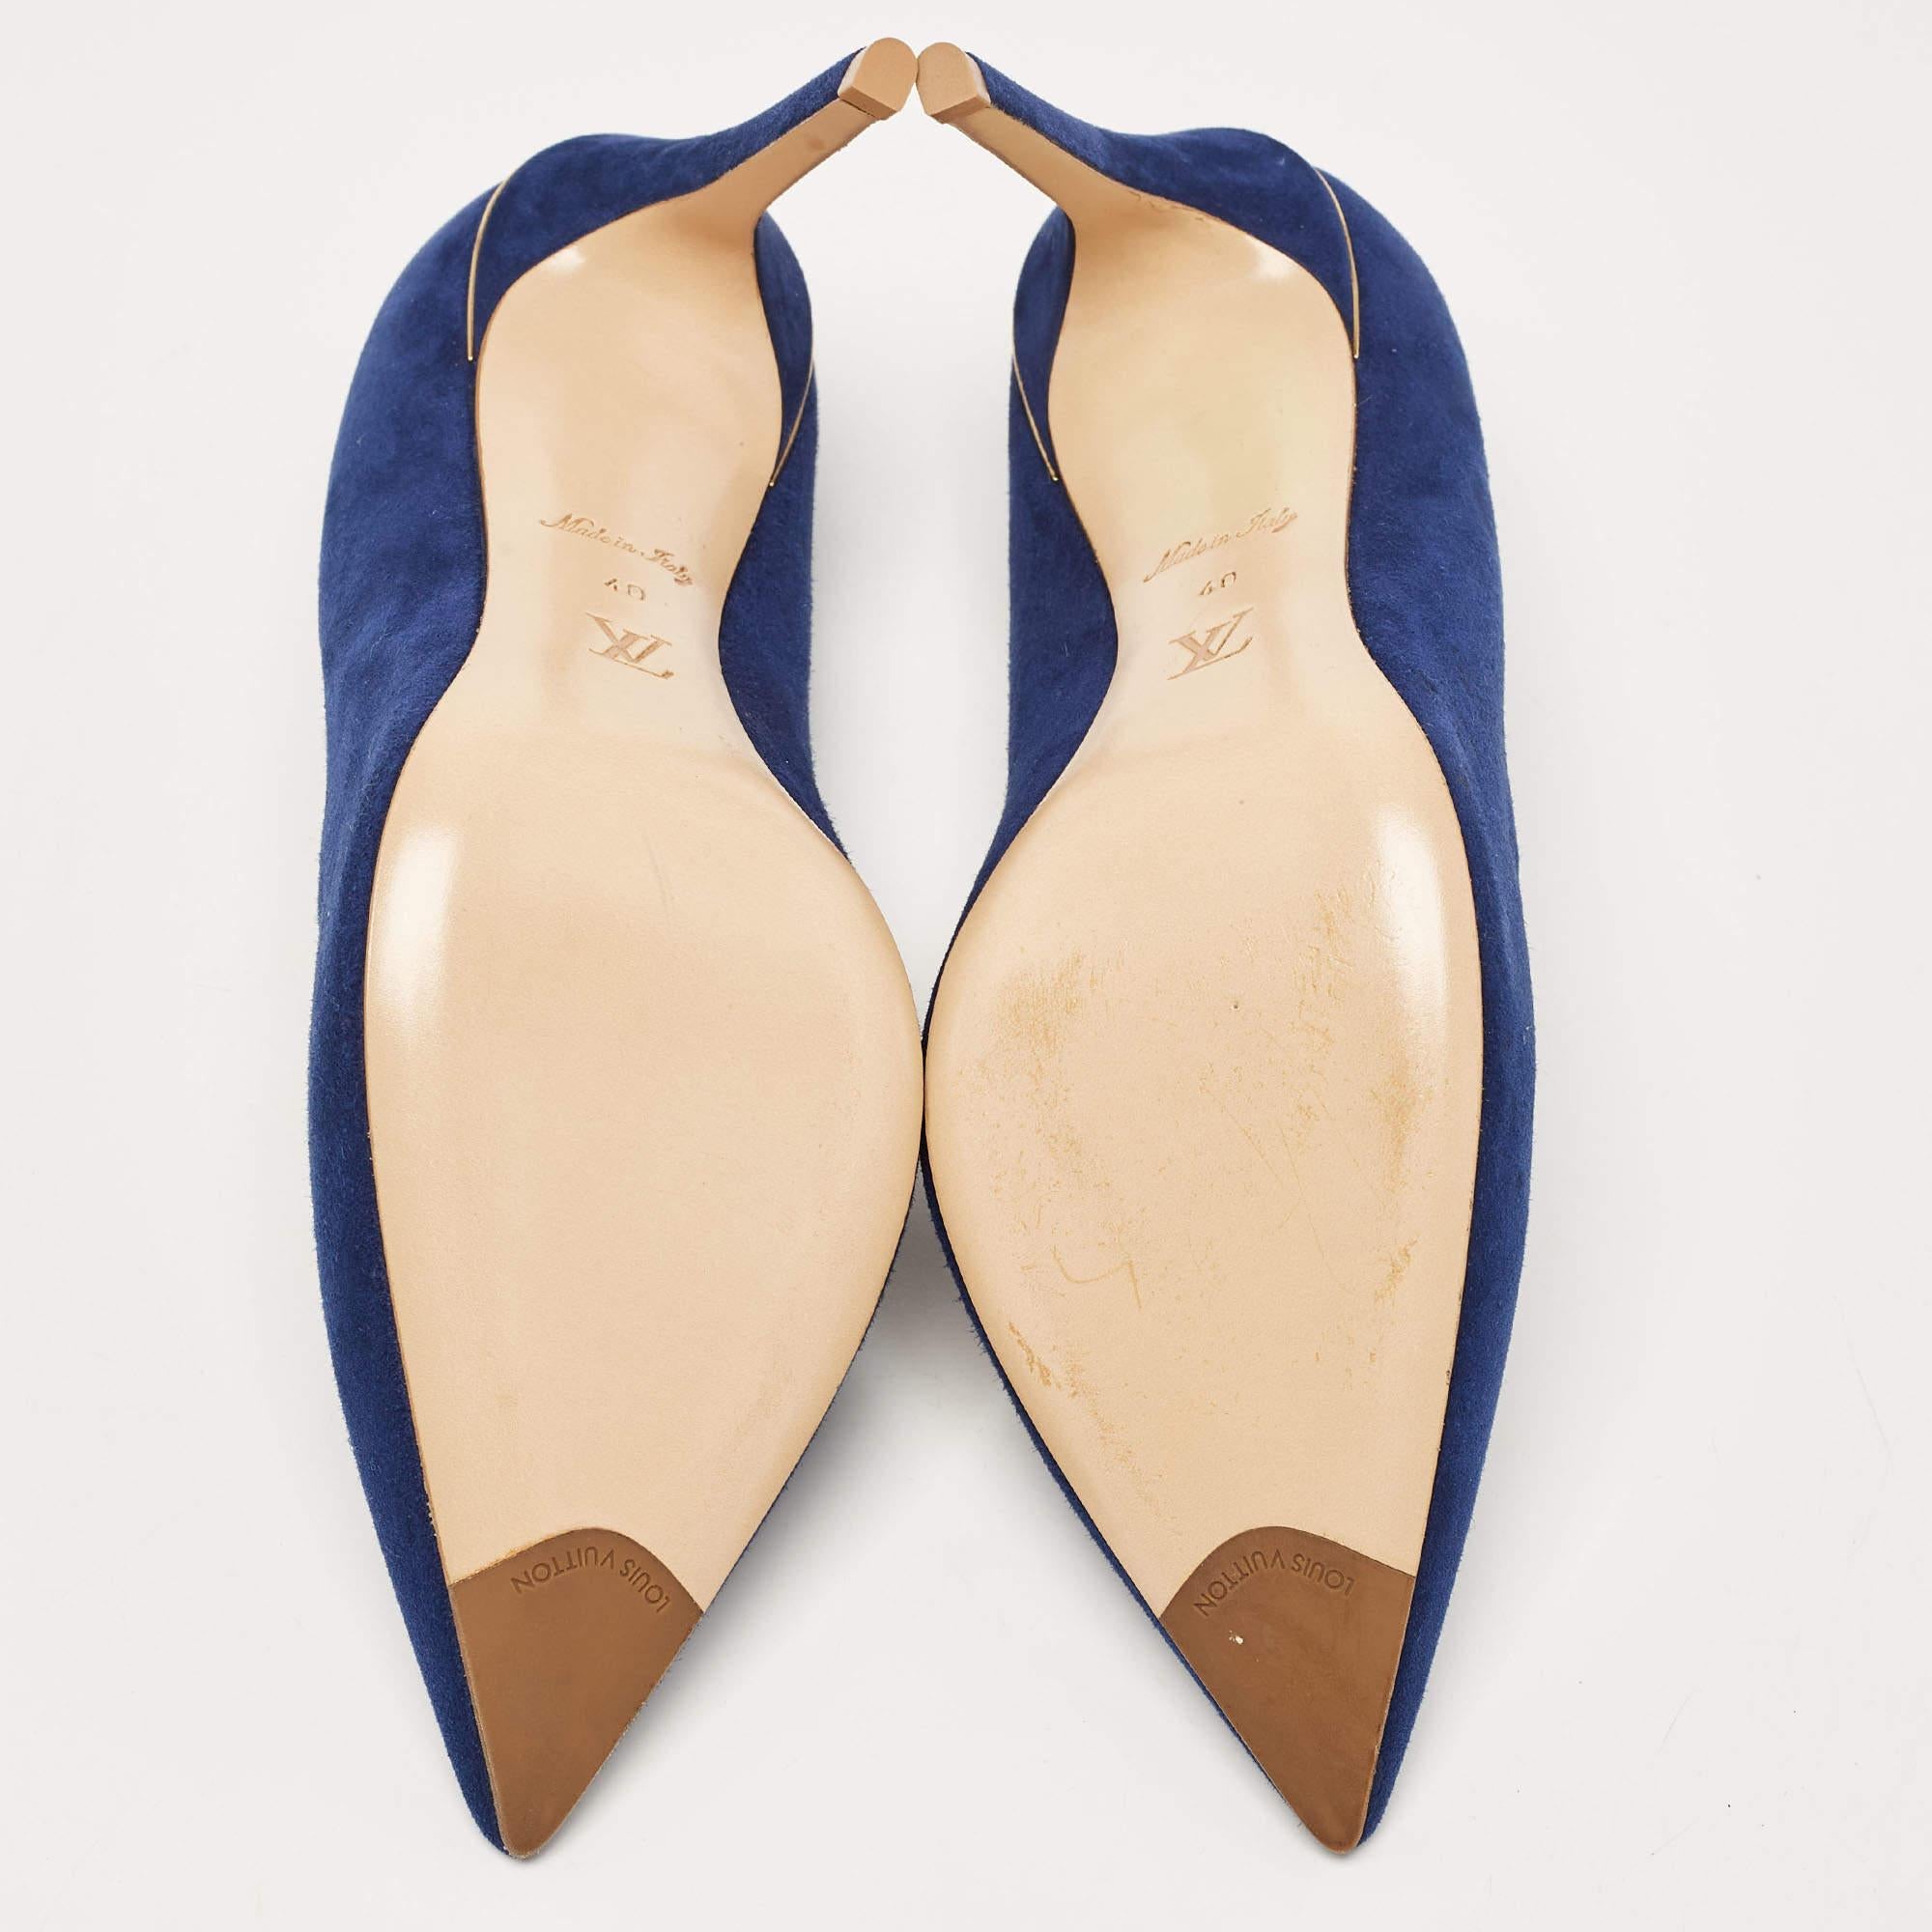 Louis Vuitton Blue Suede Pointed Toe Pumps Size 40 For Sale 3